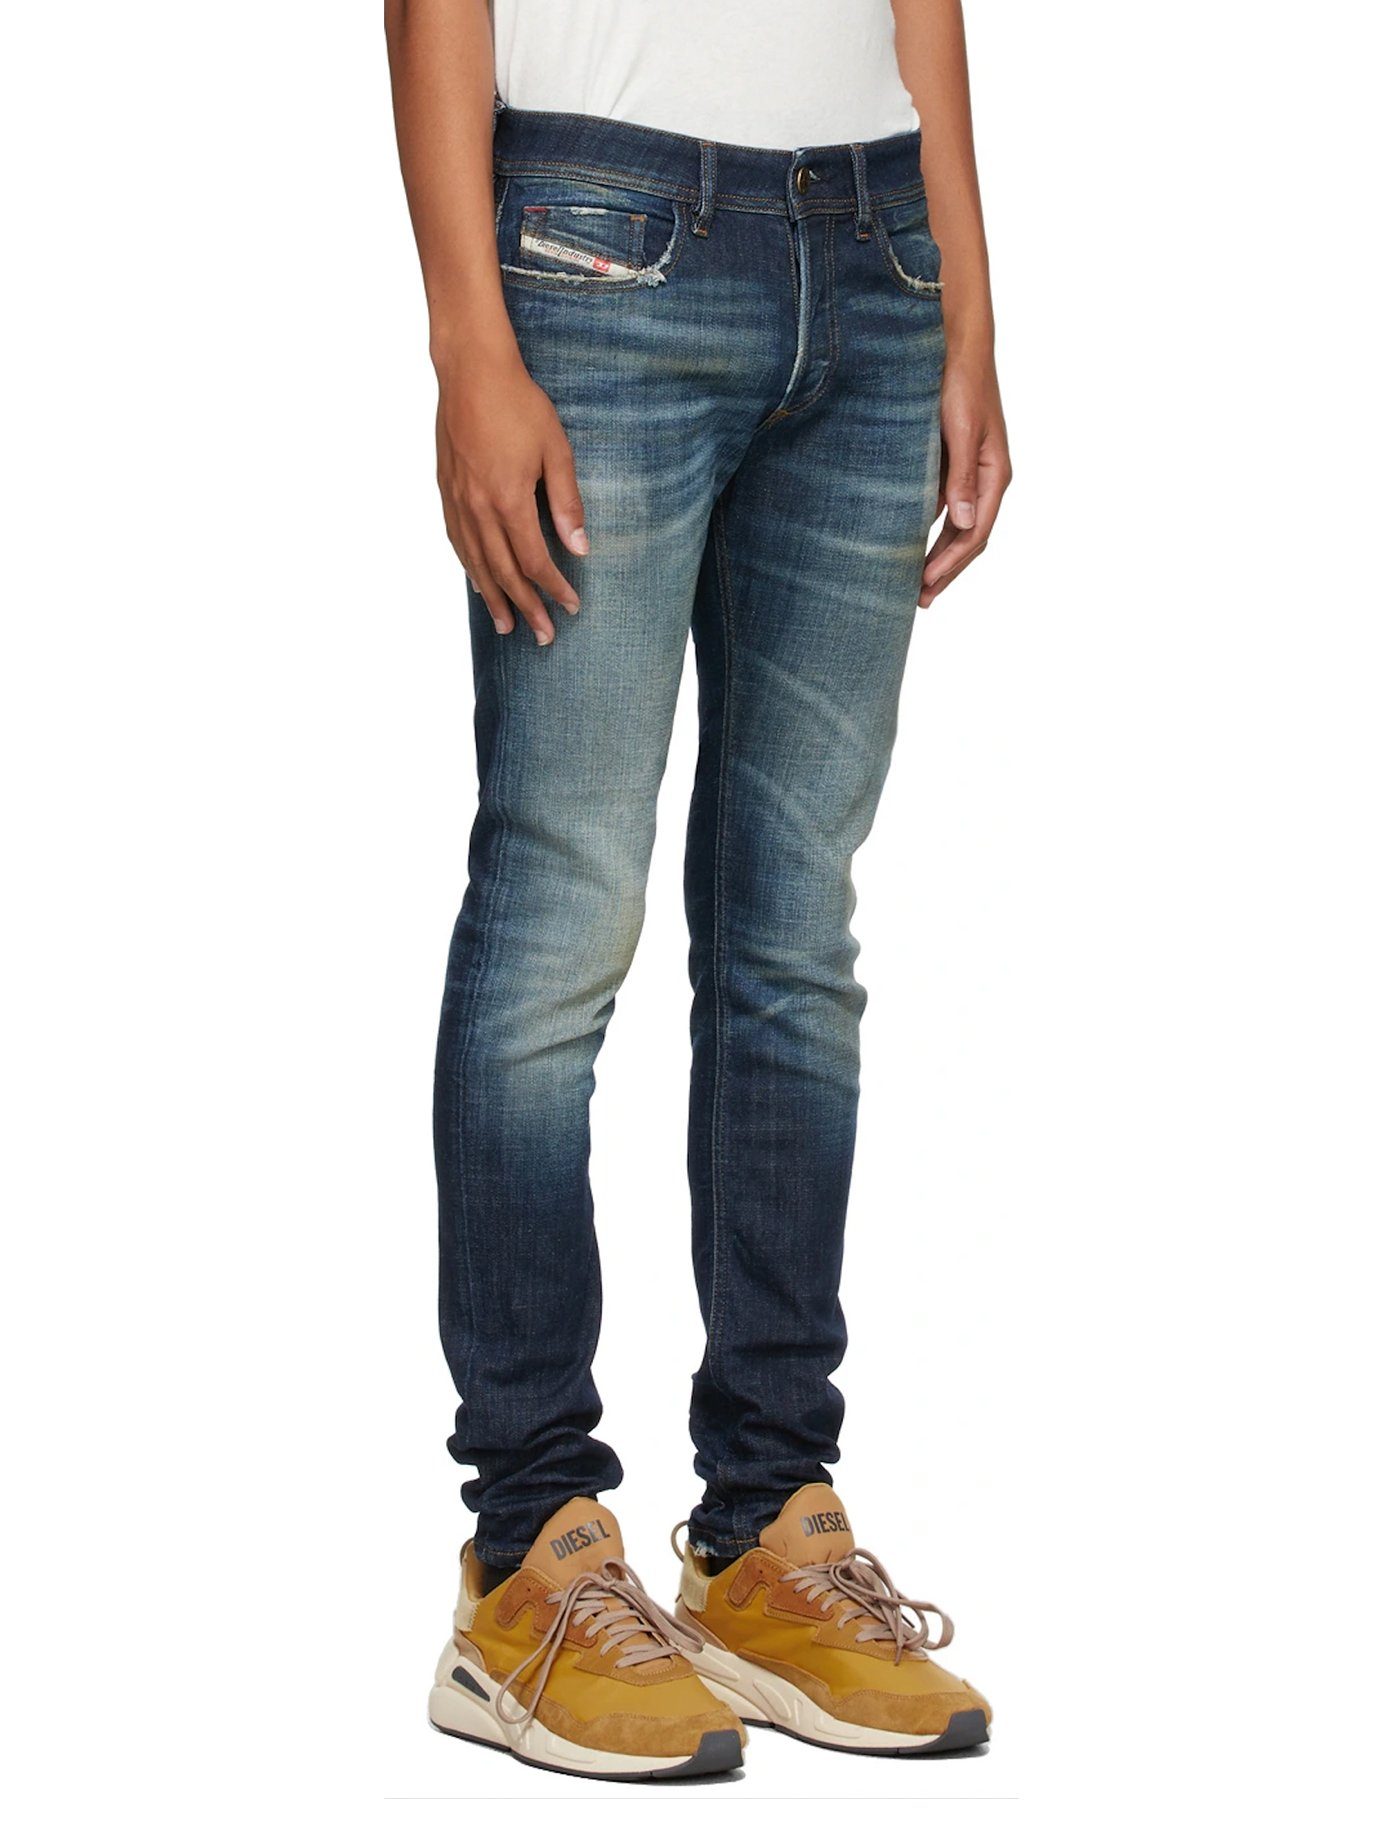 Vintage - Skinny-fit-Jeans Stretch 09A27 Diesel - Hose Länge:32 Sleenker-X